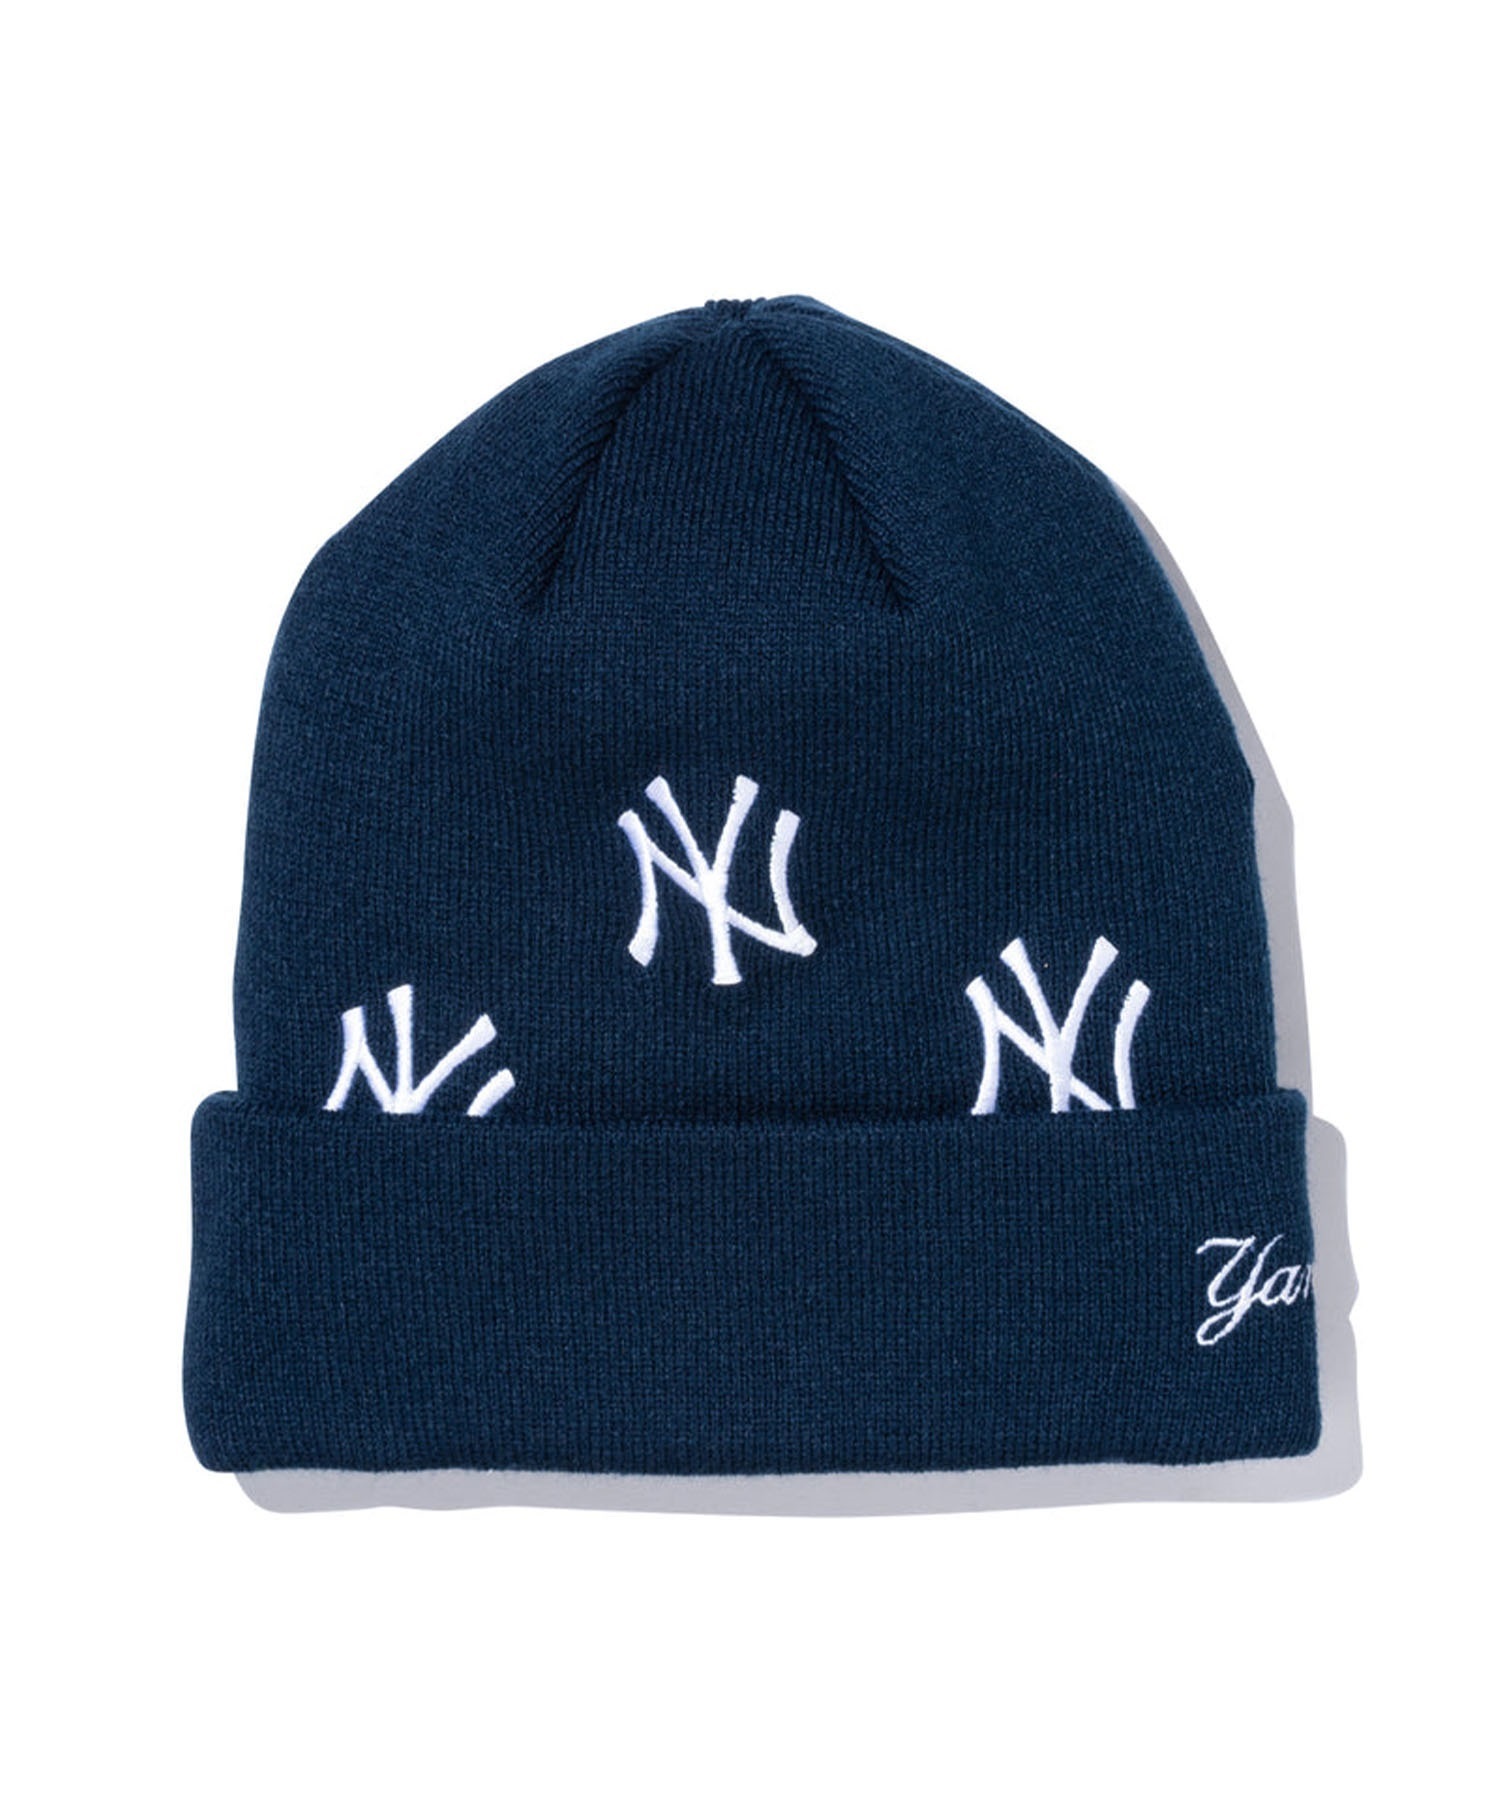 NEW ERA/ニューエラ ビーニー ニット帽 ダブル 13751343 MLB ALLOVER ニューヨーク・ヤンキース(NVY-FREE)